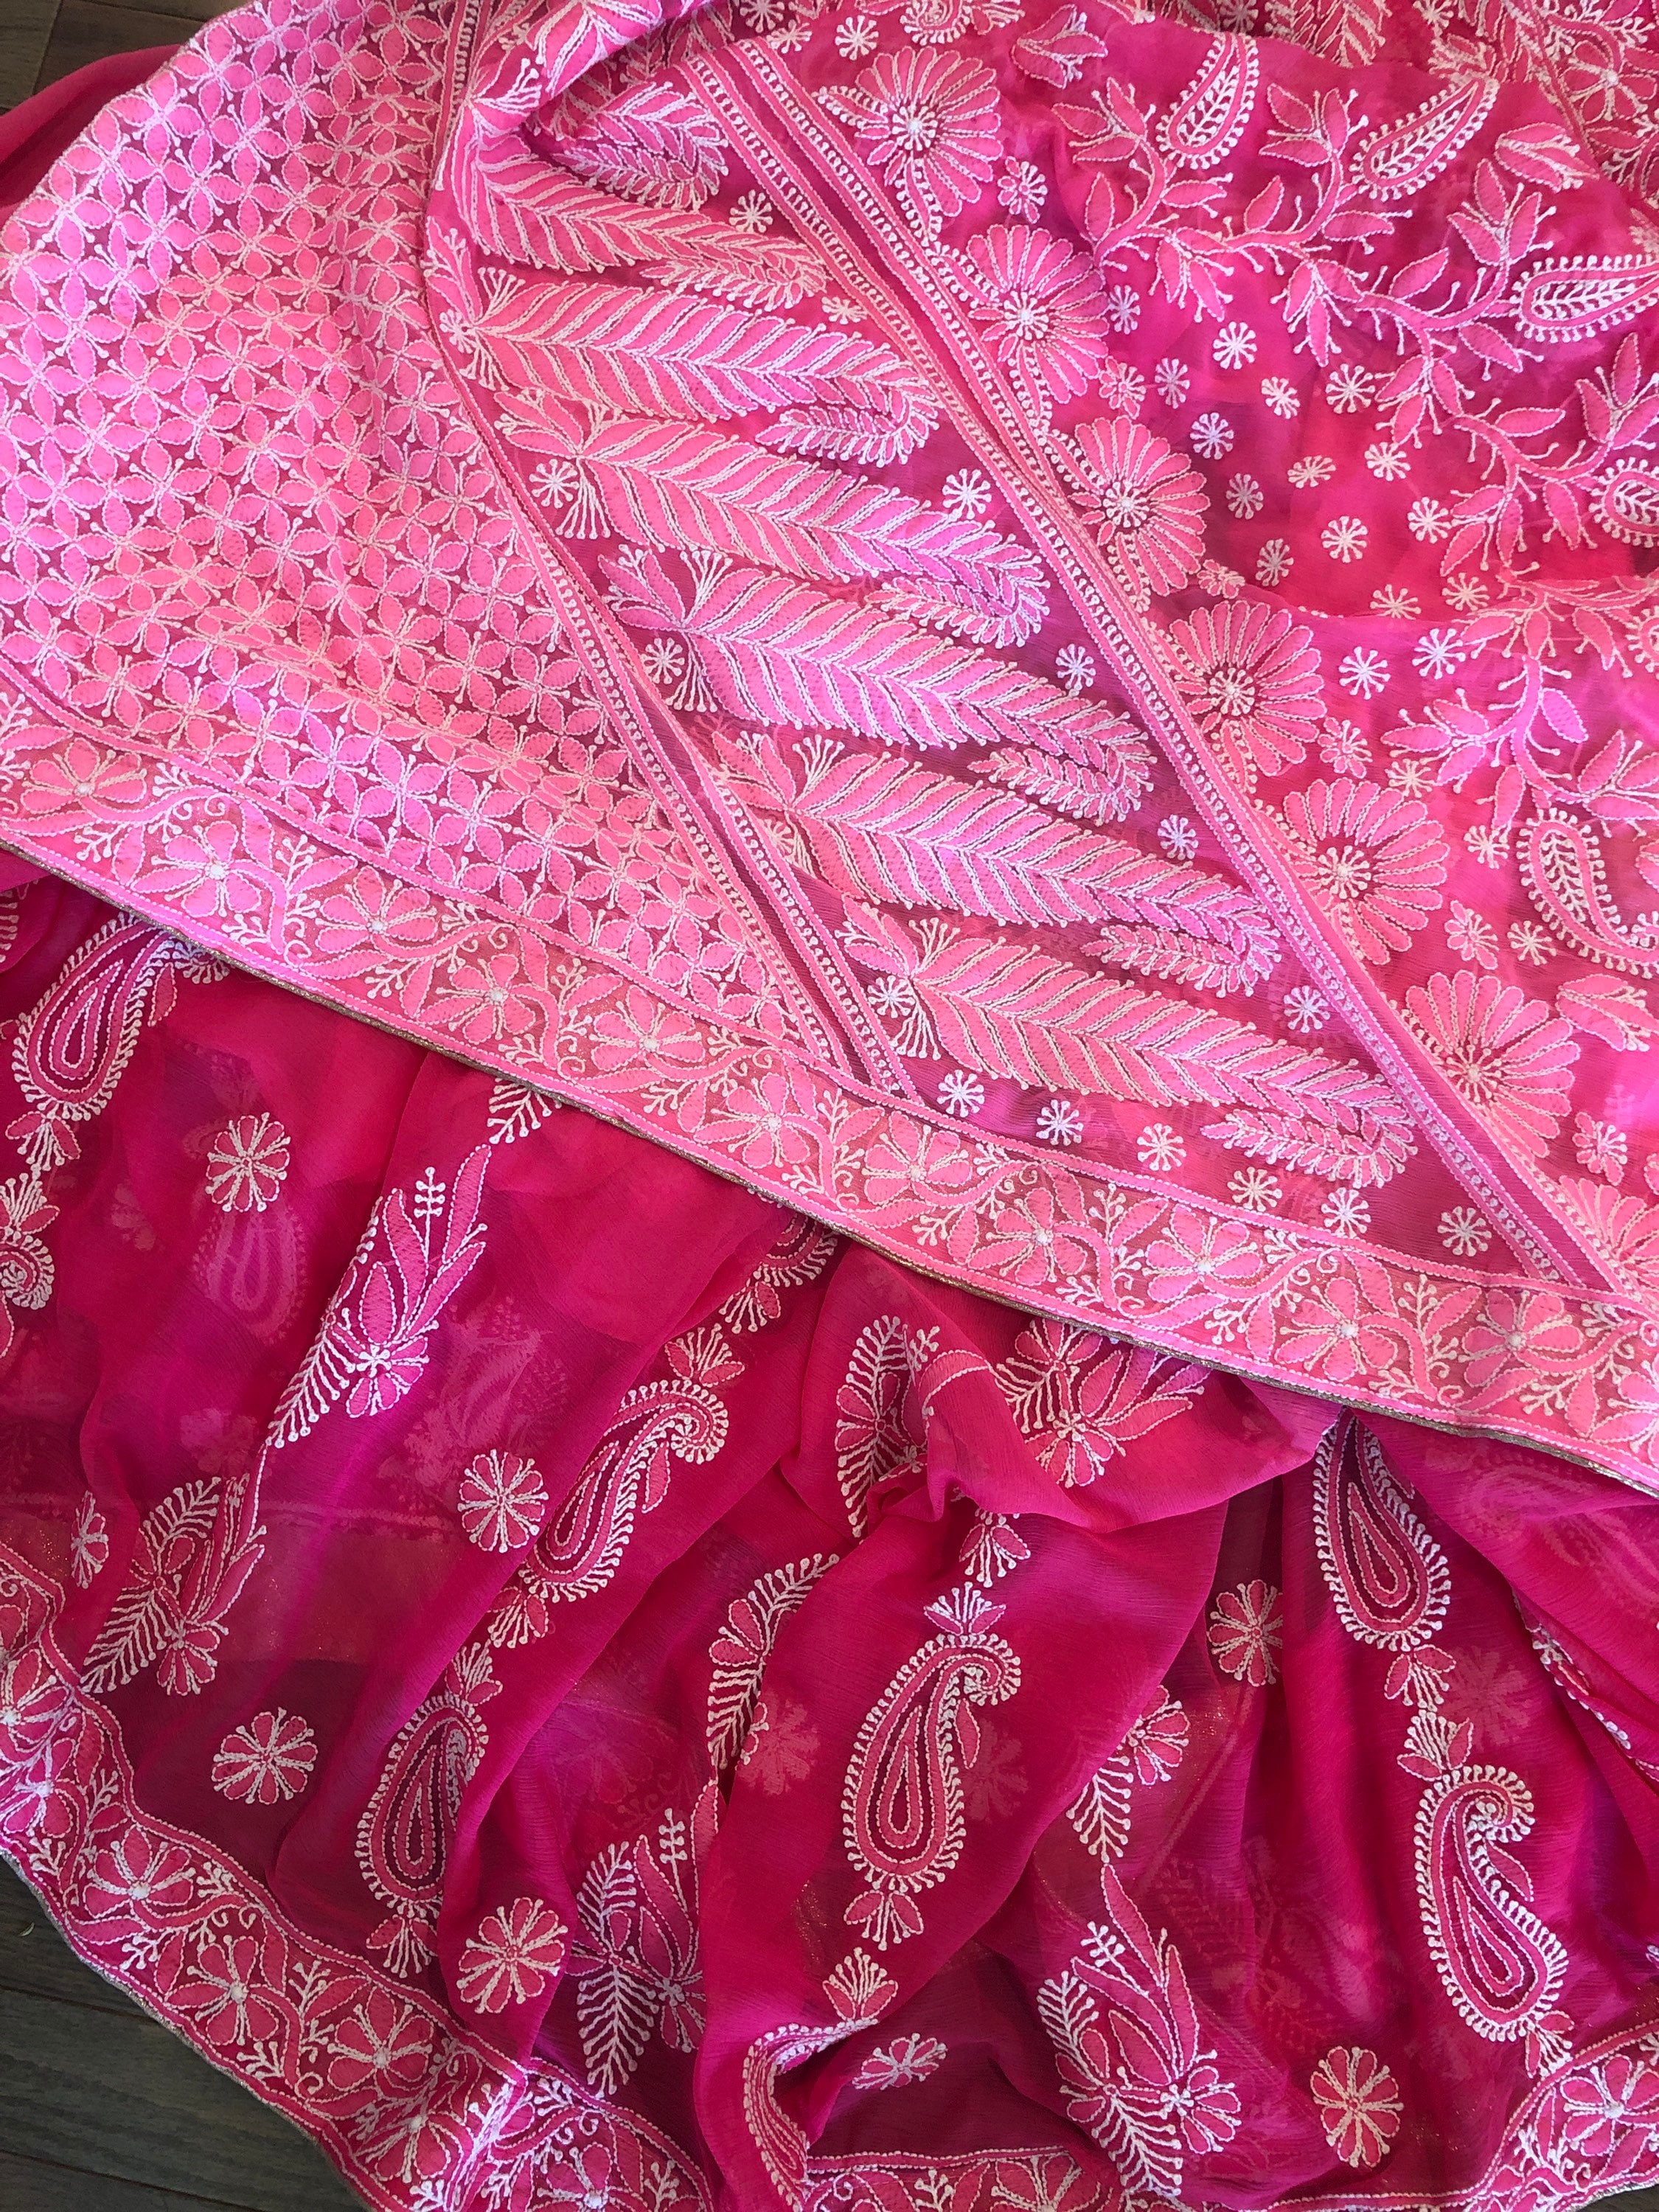 Pink Chikankari Saree on Chiffon/Pink Ombre /Free Shipping